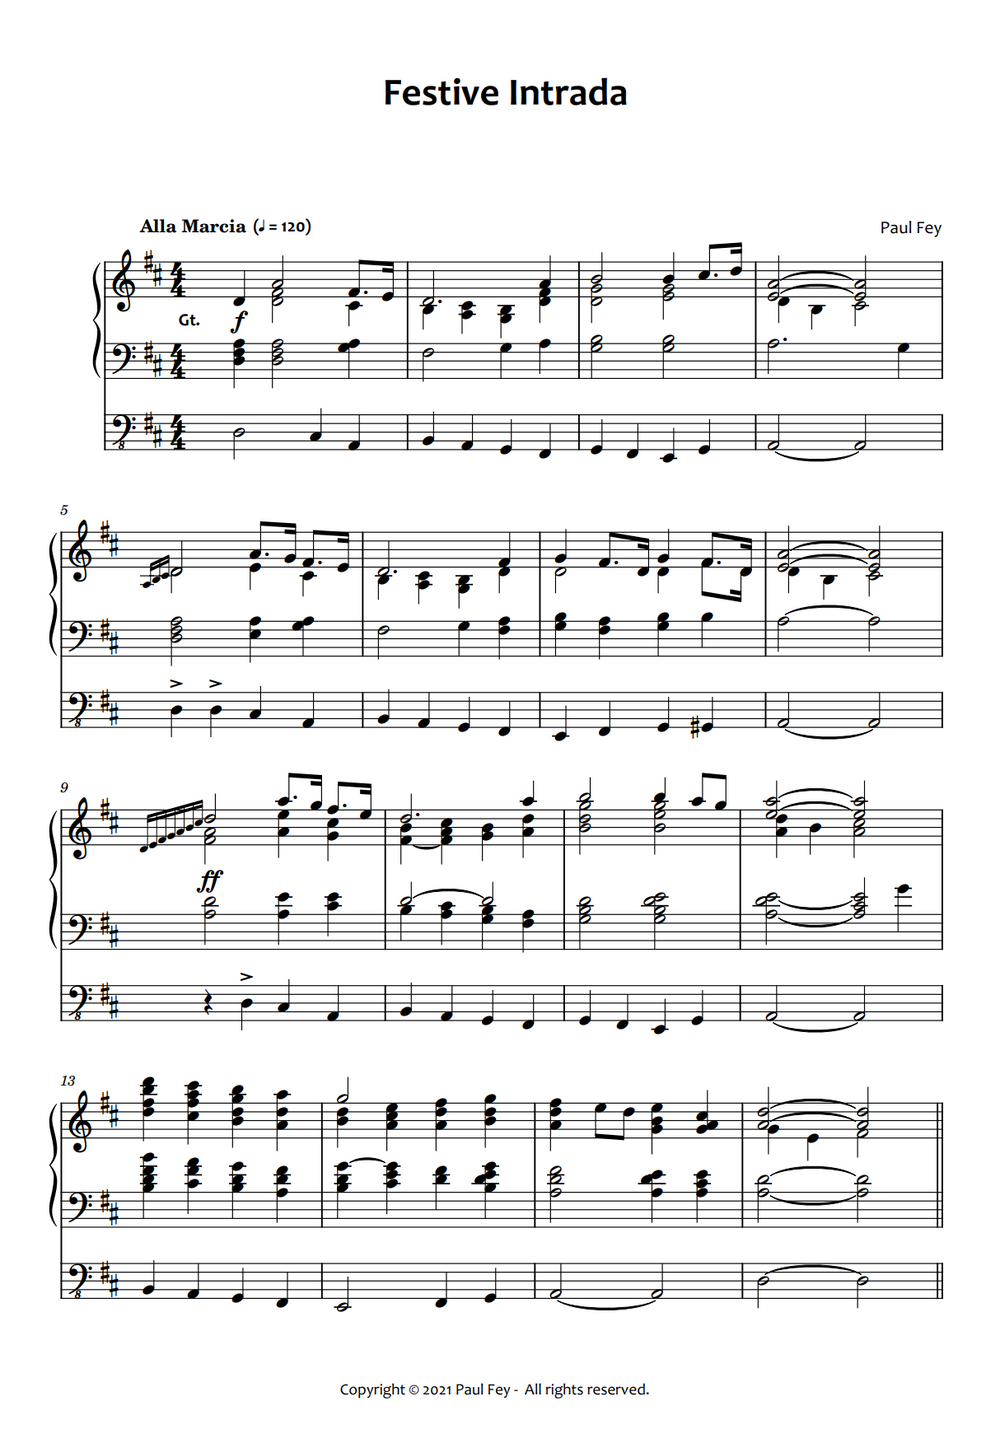 Festive Intrada" in D-Major (Sheet Music) - Music for Pipe Organ by Paul Fey